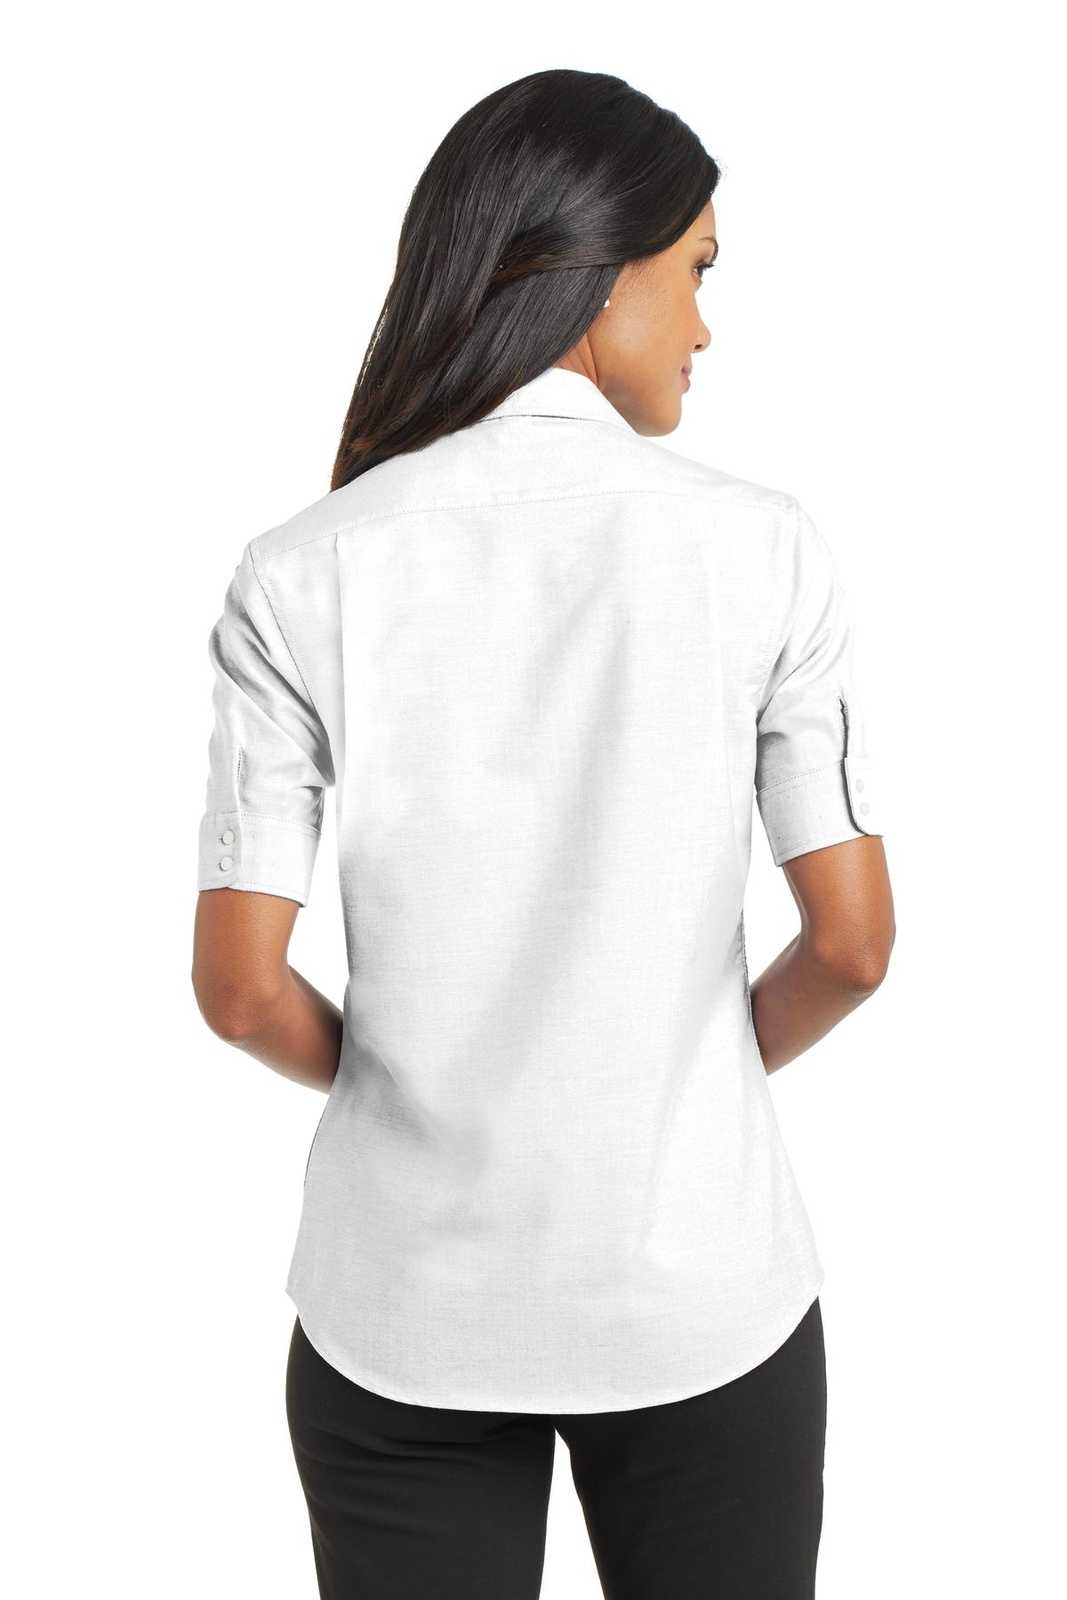 Port Authority L659 Ladies Short Sleeve Superpro Oxford Shirt - White - HIT a Double - 2